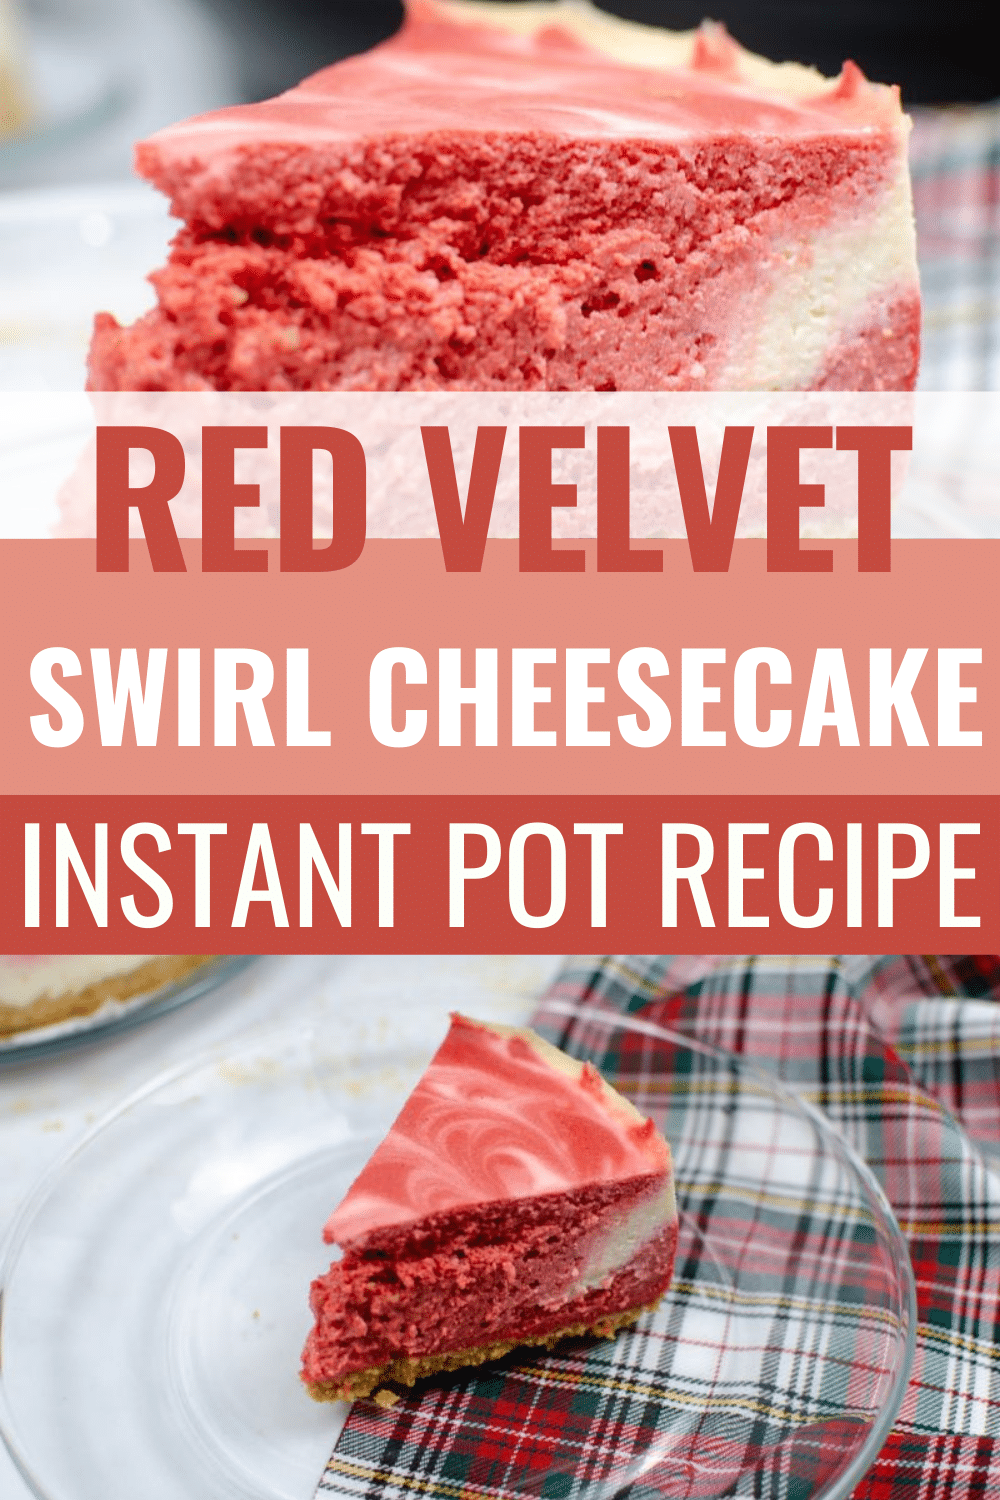 Red velvet swirl cheesecake is easy to make in an instant pot. The recipe uses a graham cracker crust & creamy red velvet topping. Delicious! #instantpot #pressurecooker #cheesecake #redvelvet via @wondermomwannab